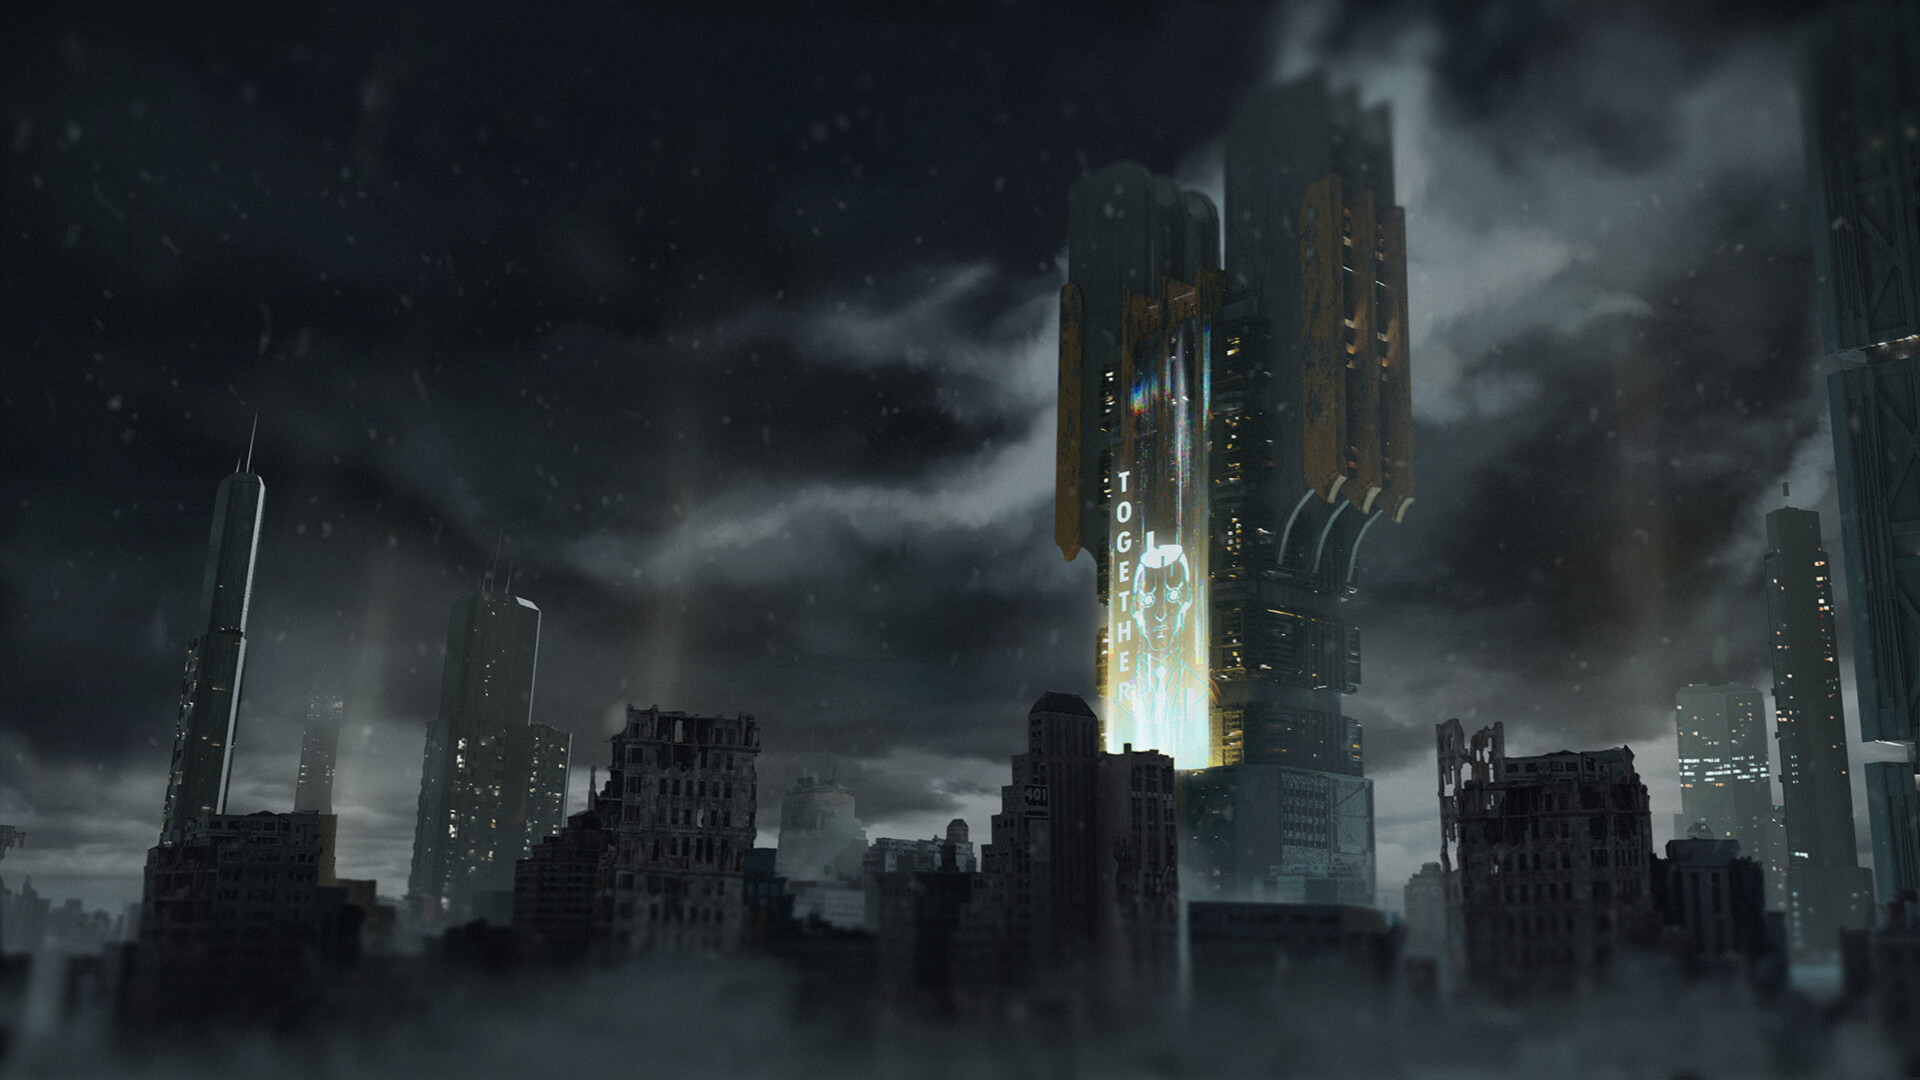 ArtStation - Cyberpunk city